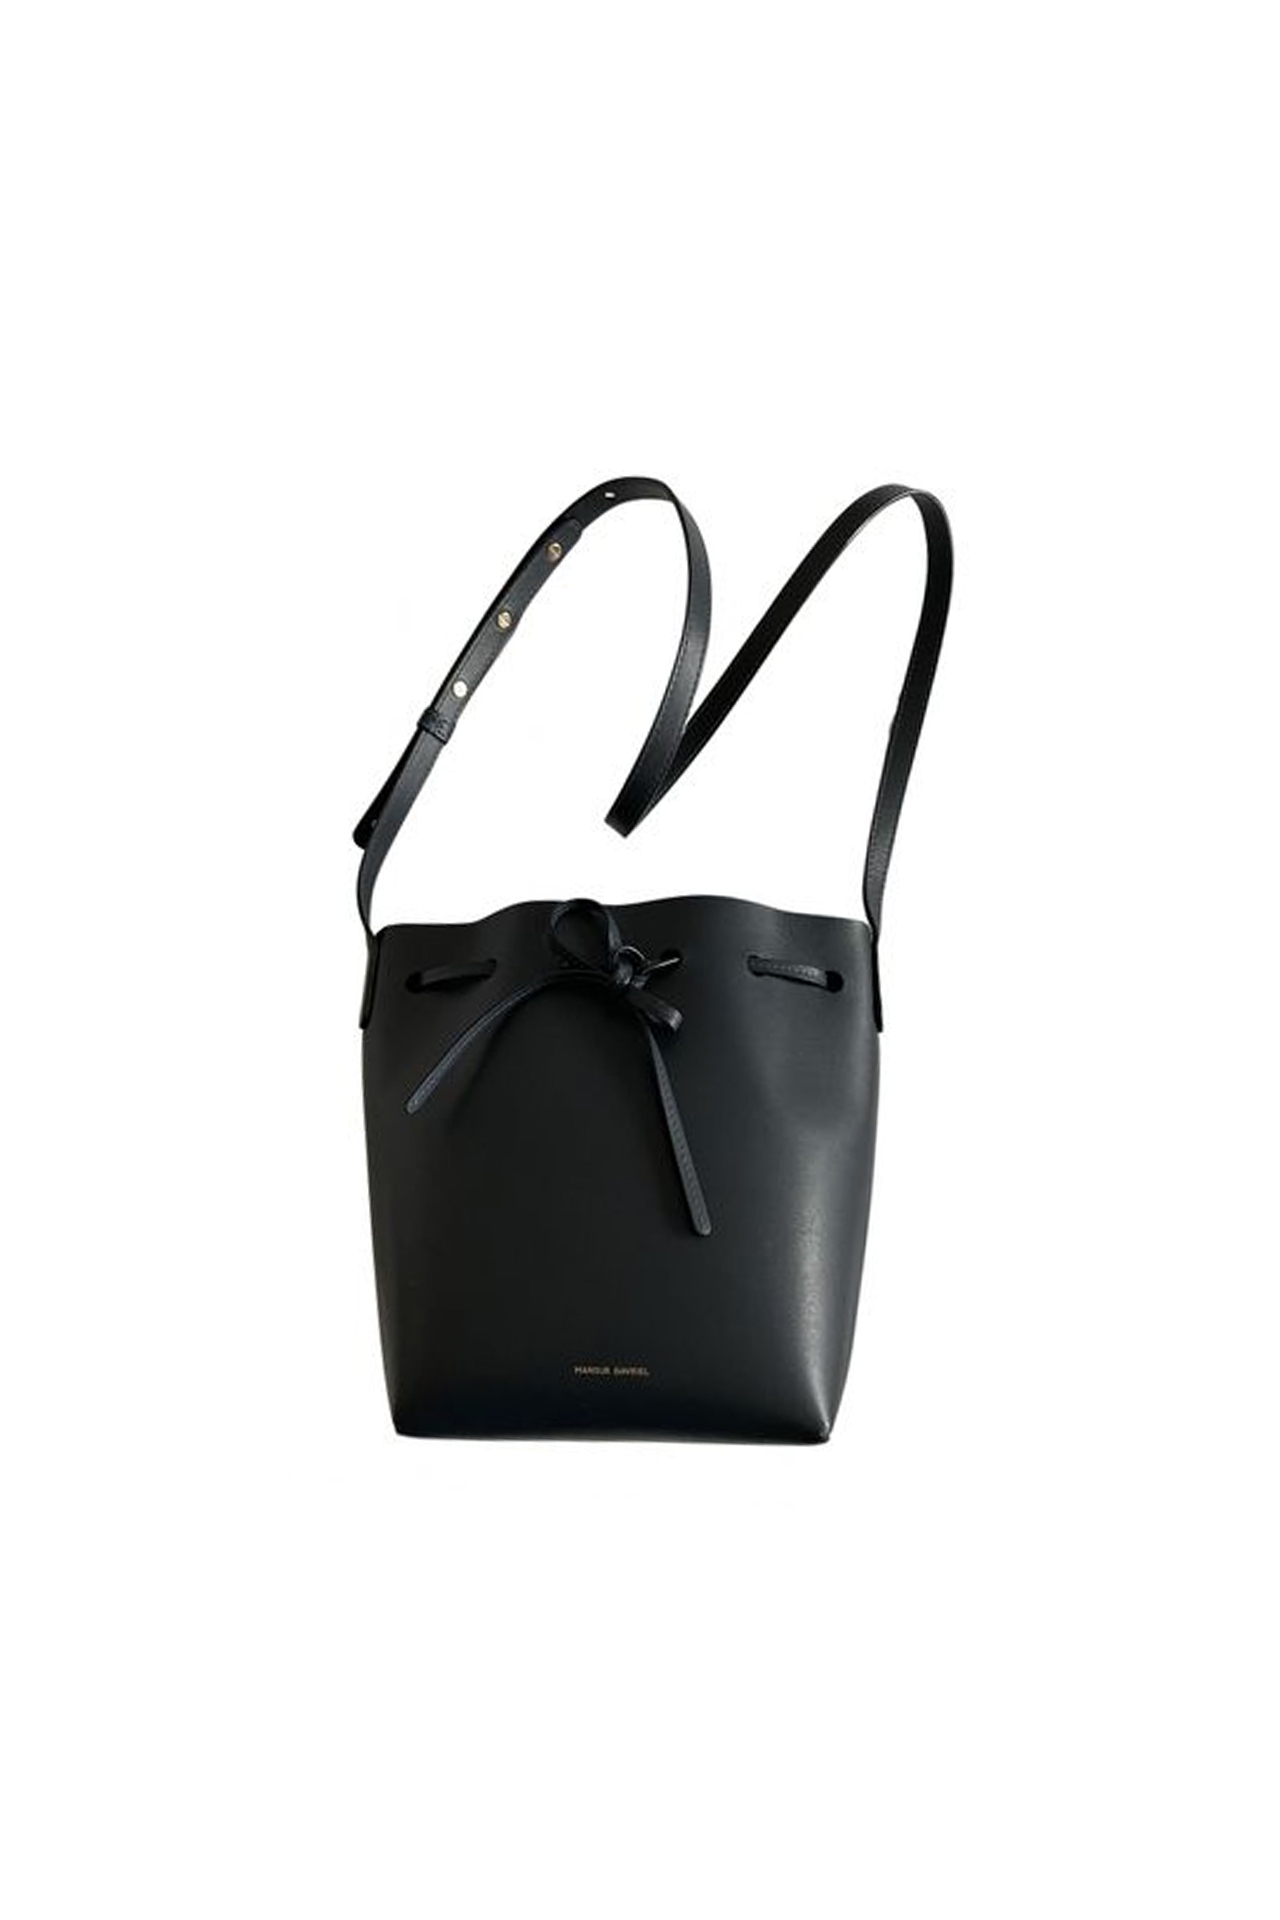 Pre-Loved Designer Bucket Bags For Women – Refined Luxury